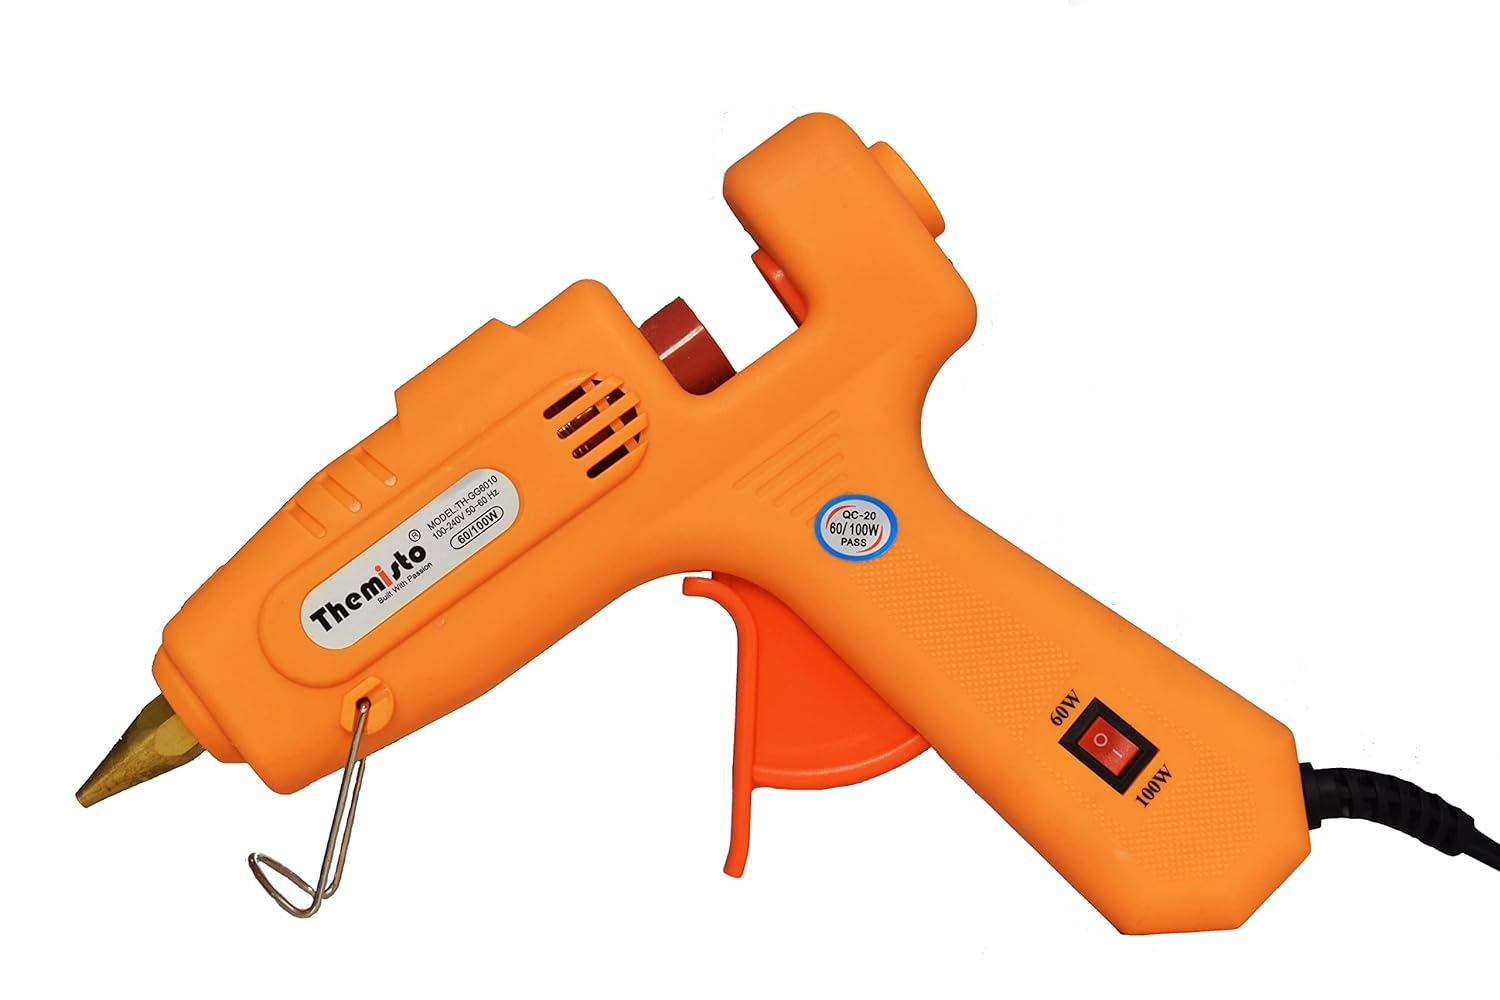 Themisto Hot Melt Glue Gun | 60/100W Dual Wattage( Power) Melt Glue Gun Kit with 8 Pcs Glue Sticks for Arts & Crafts